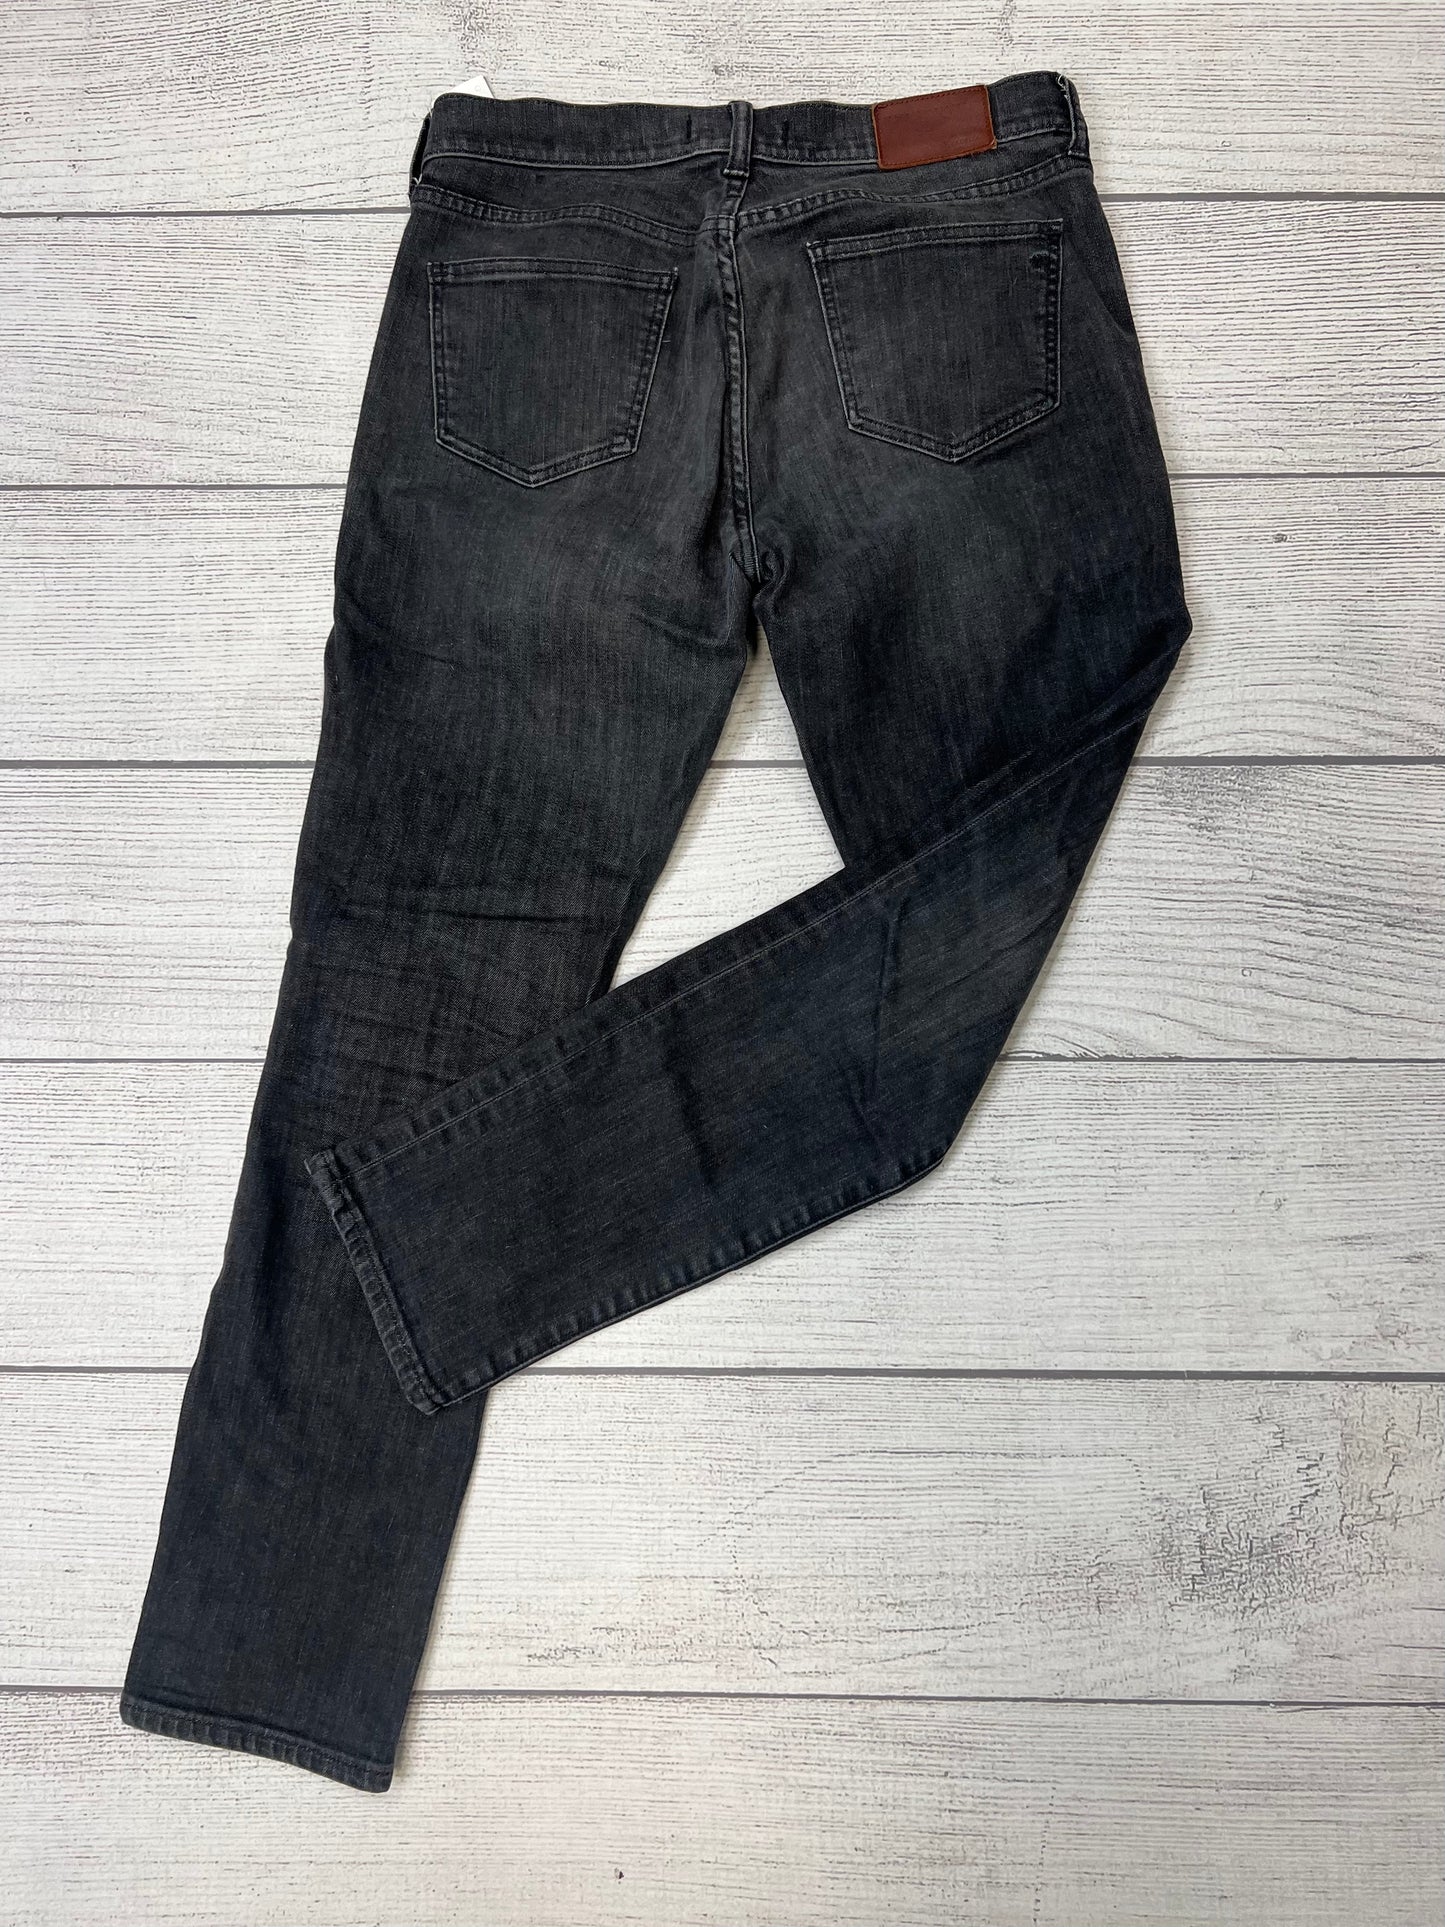 Black Jeans Designer Madewell, Size 2